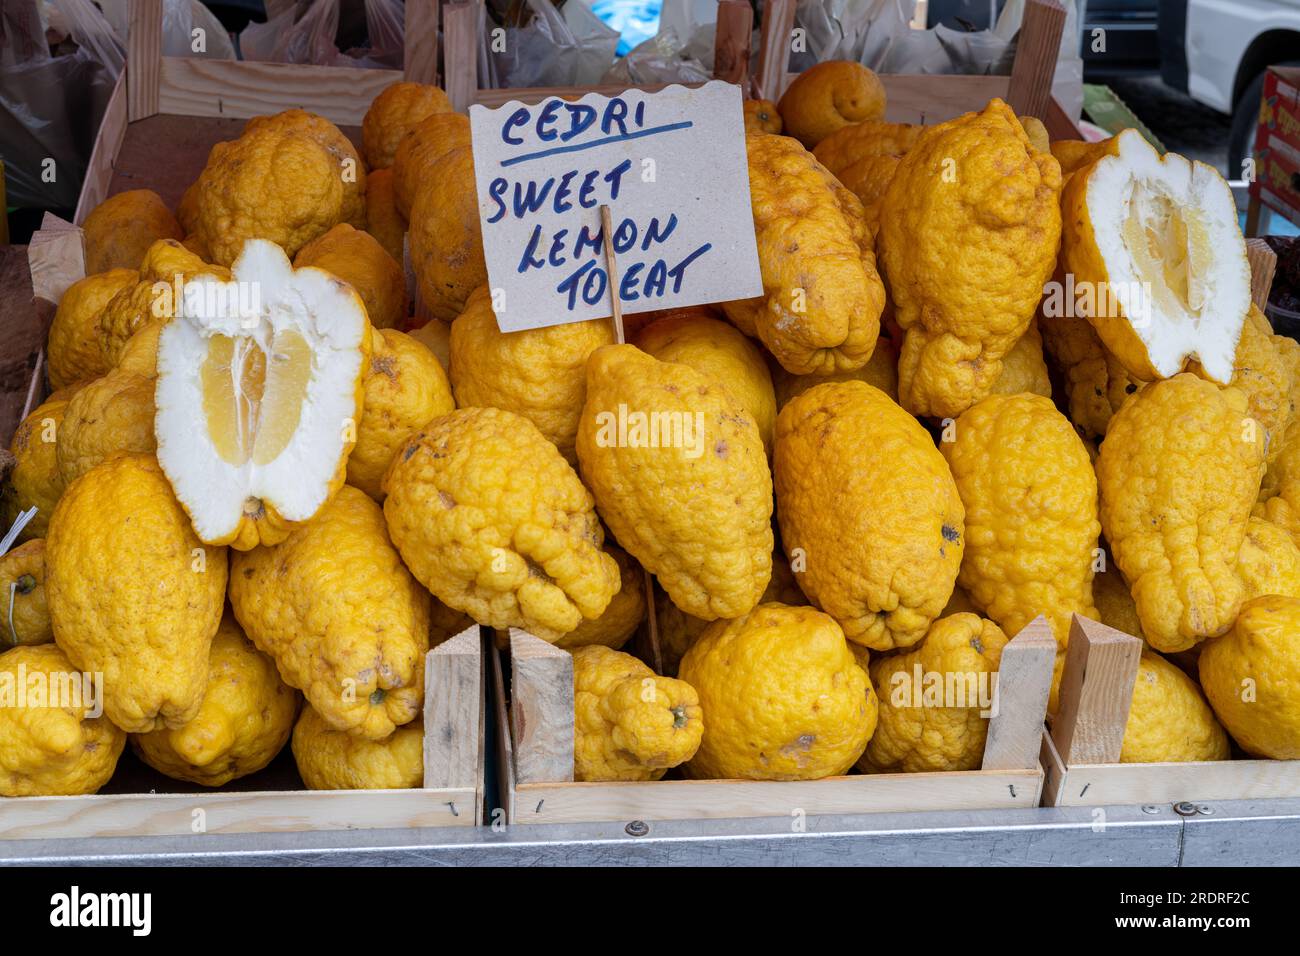 Fresh Cedri lemons sold at a local market in Sicily, Italy (translation cedri: large citrus fruit), horizontal Stock Photo